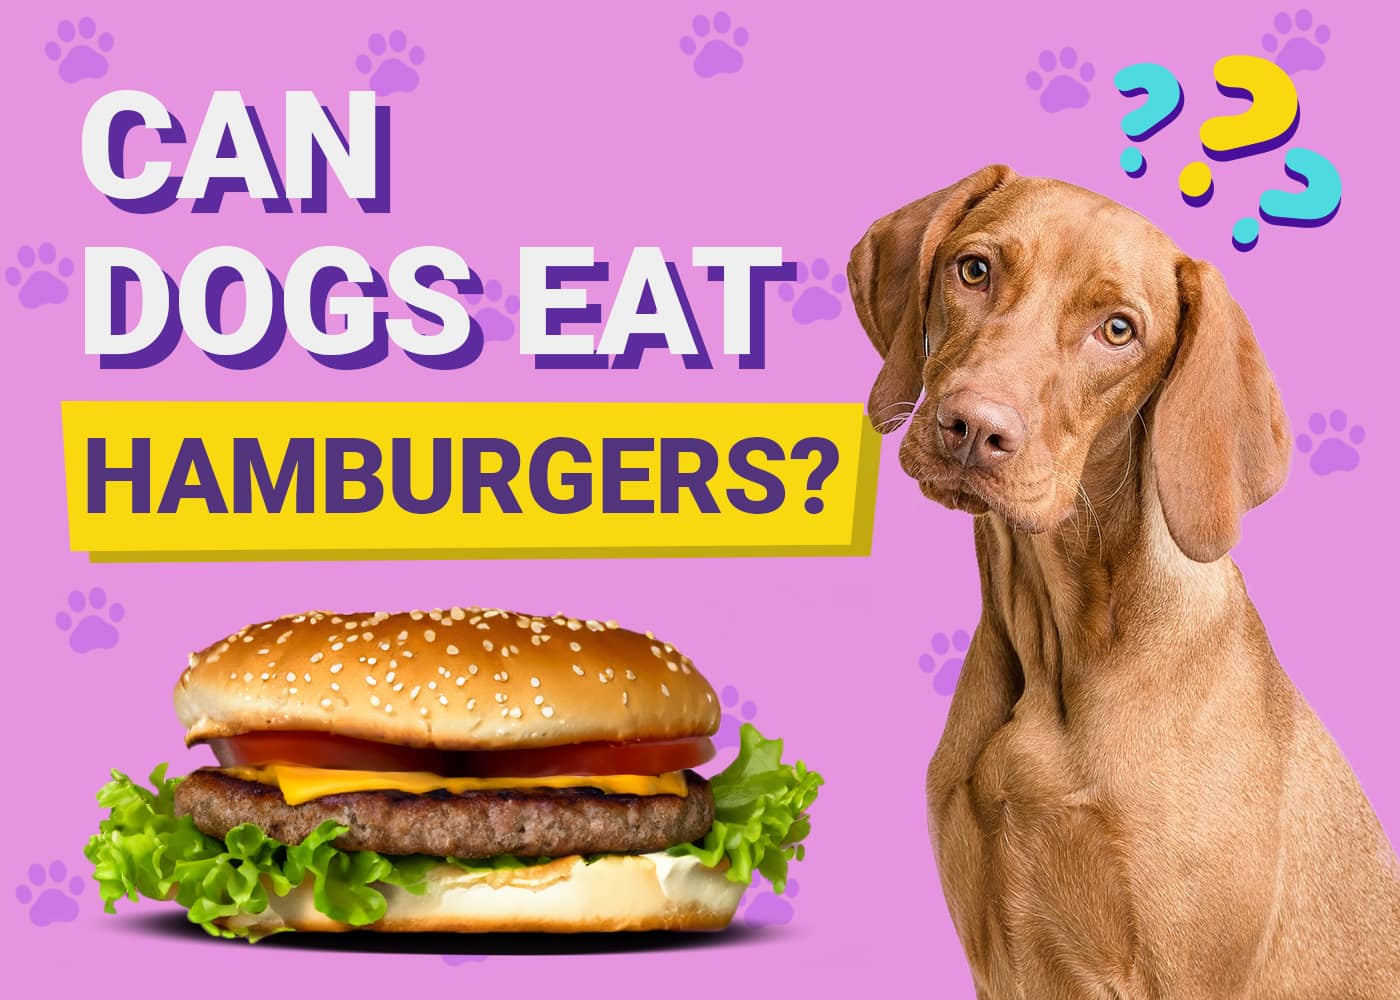 Can Dogs Eat Hamburgers